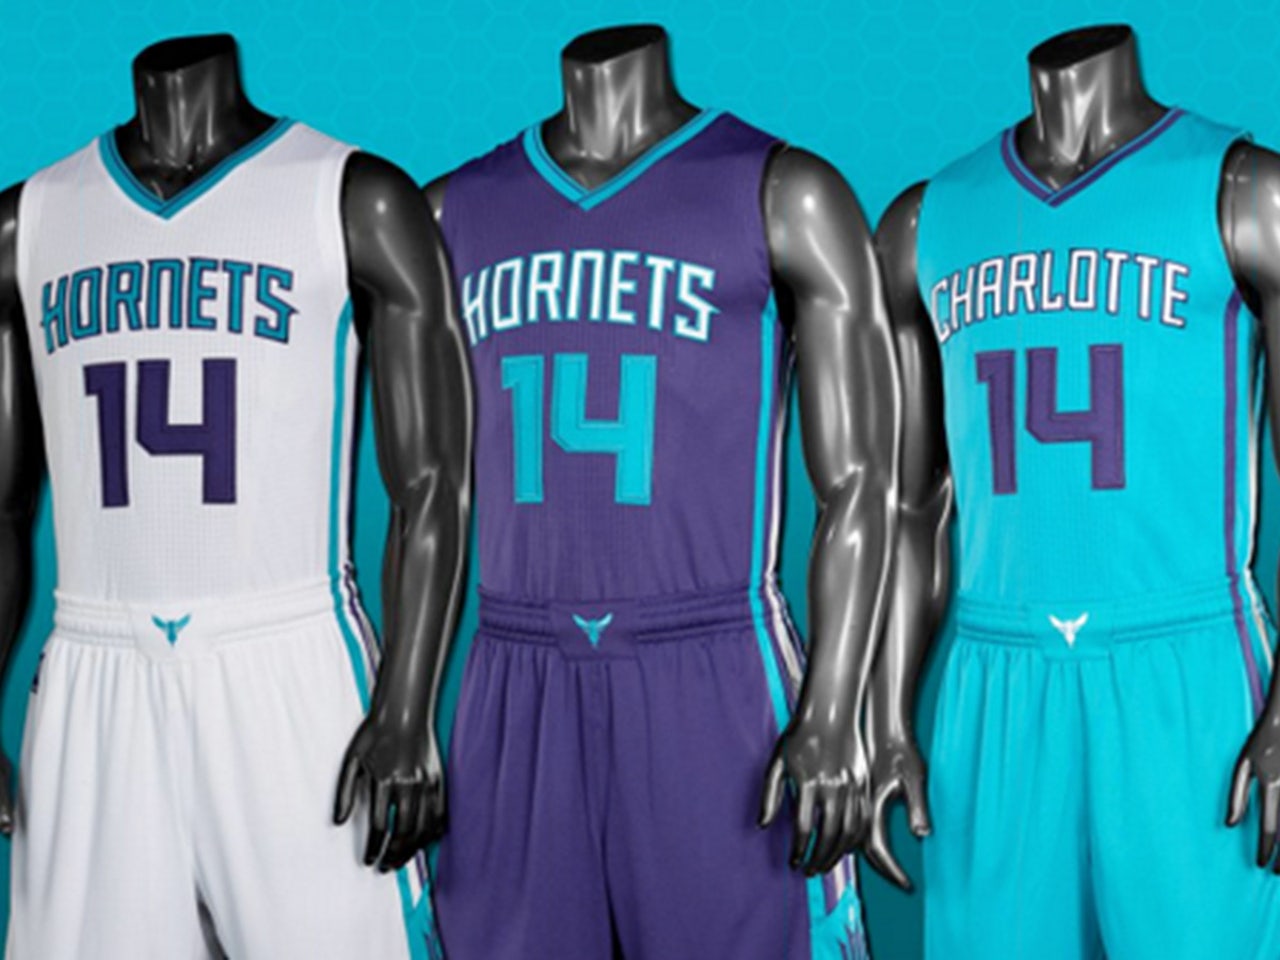 Charlotte Knights unveil new color scheme, logo and uniform